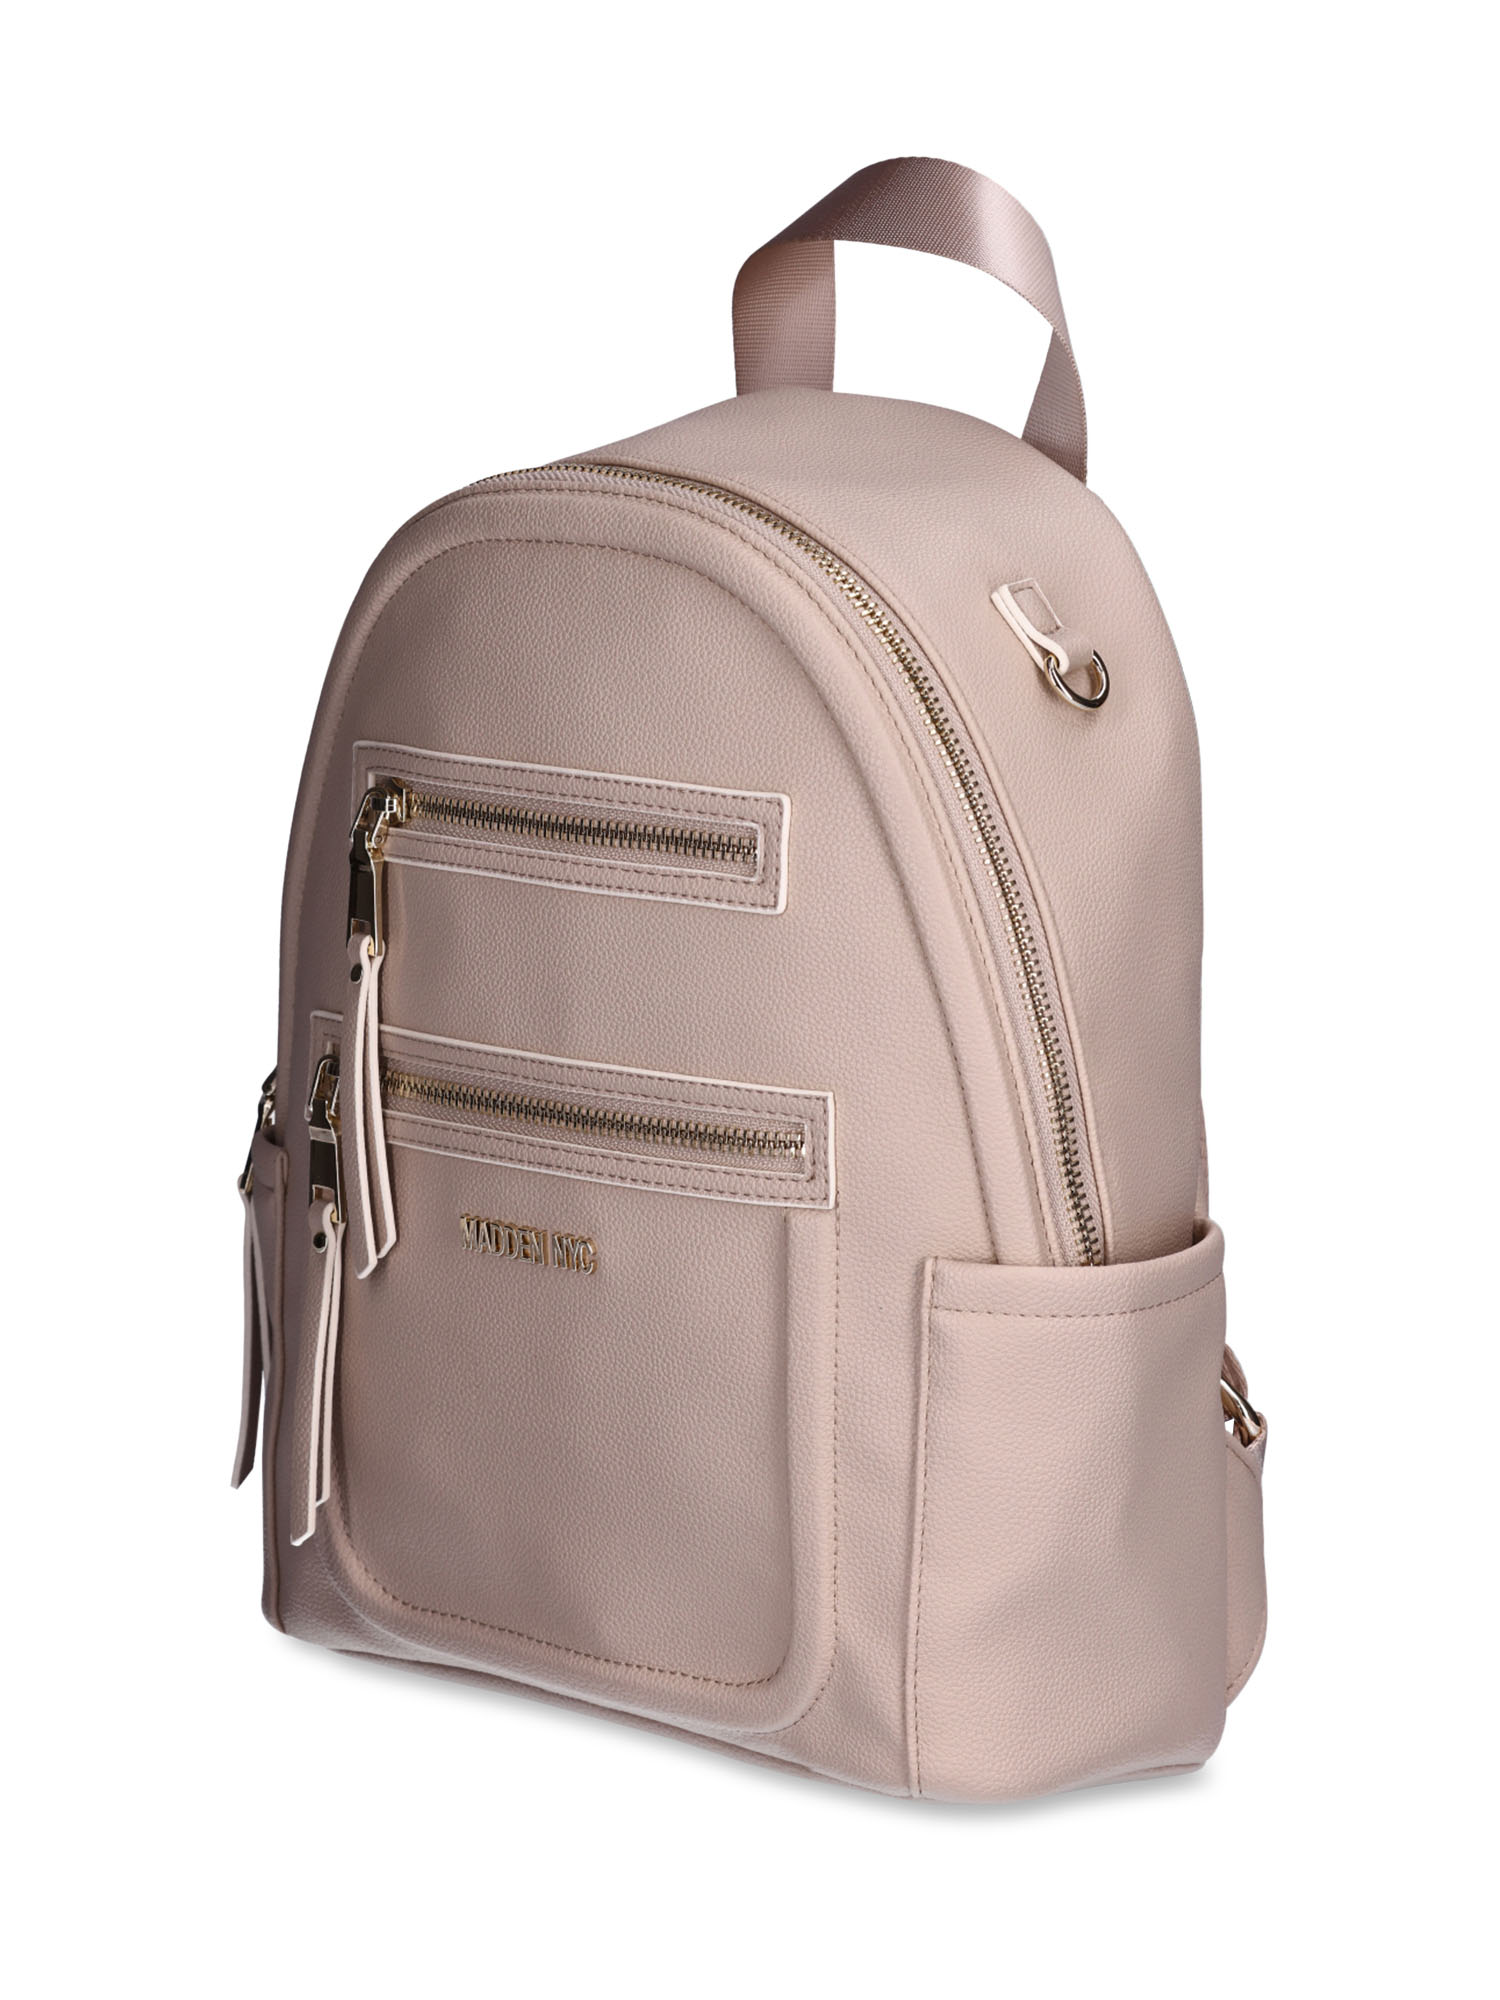 Bags | Nine West Backpack Purse | Poshmark